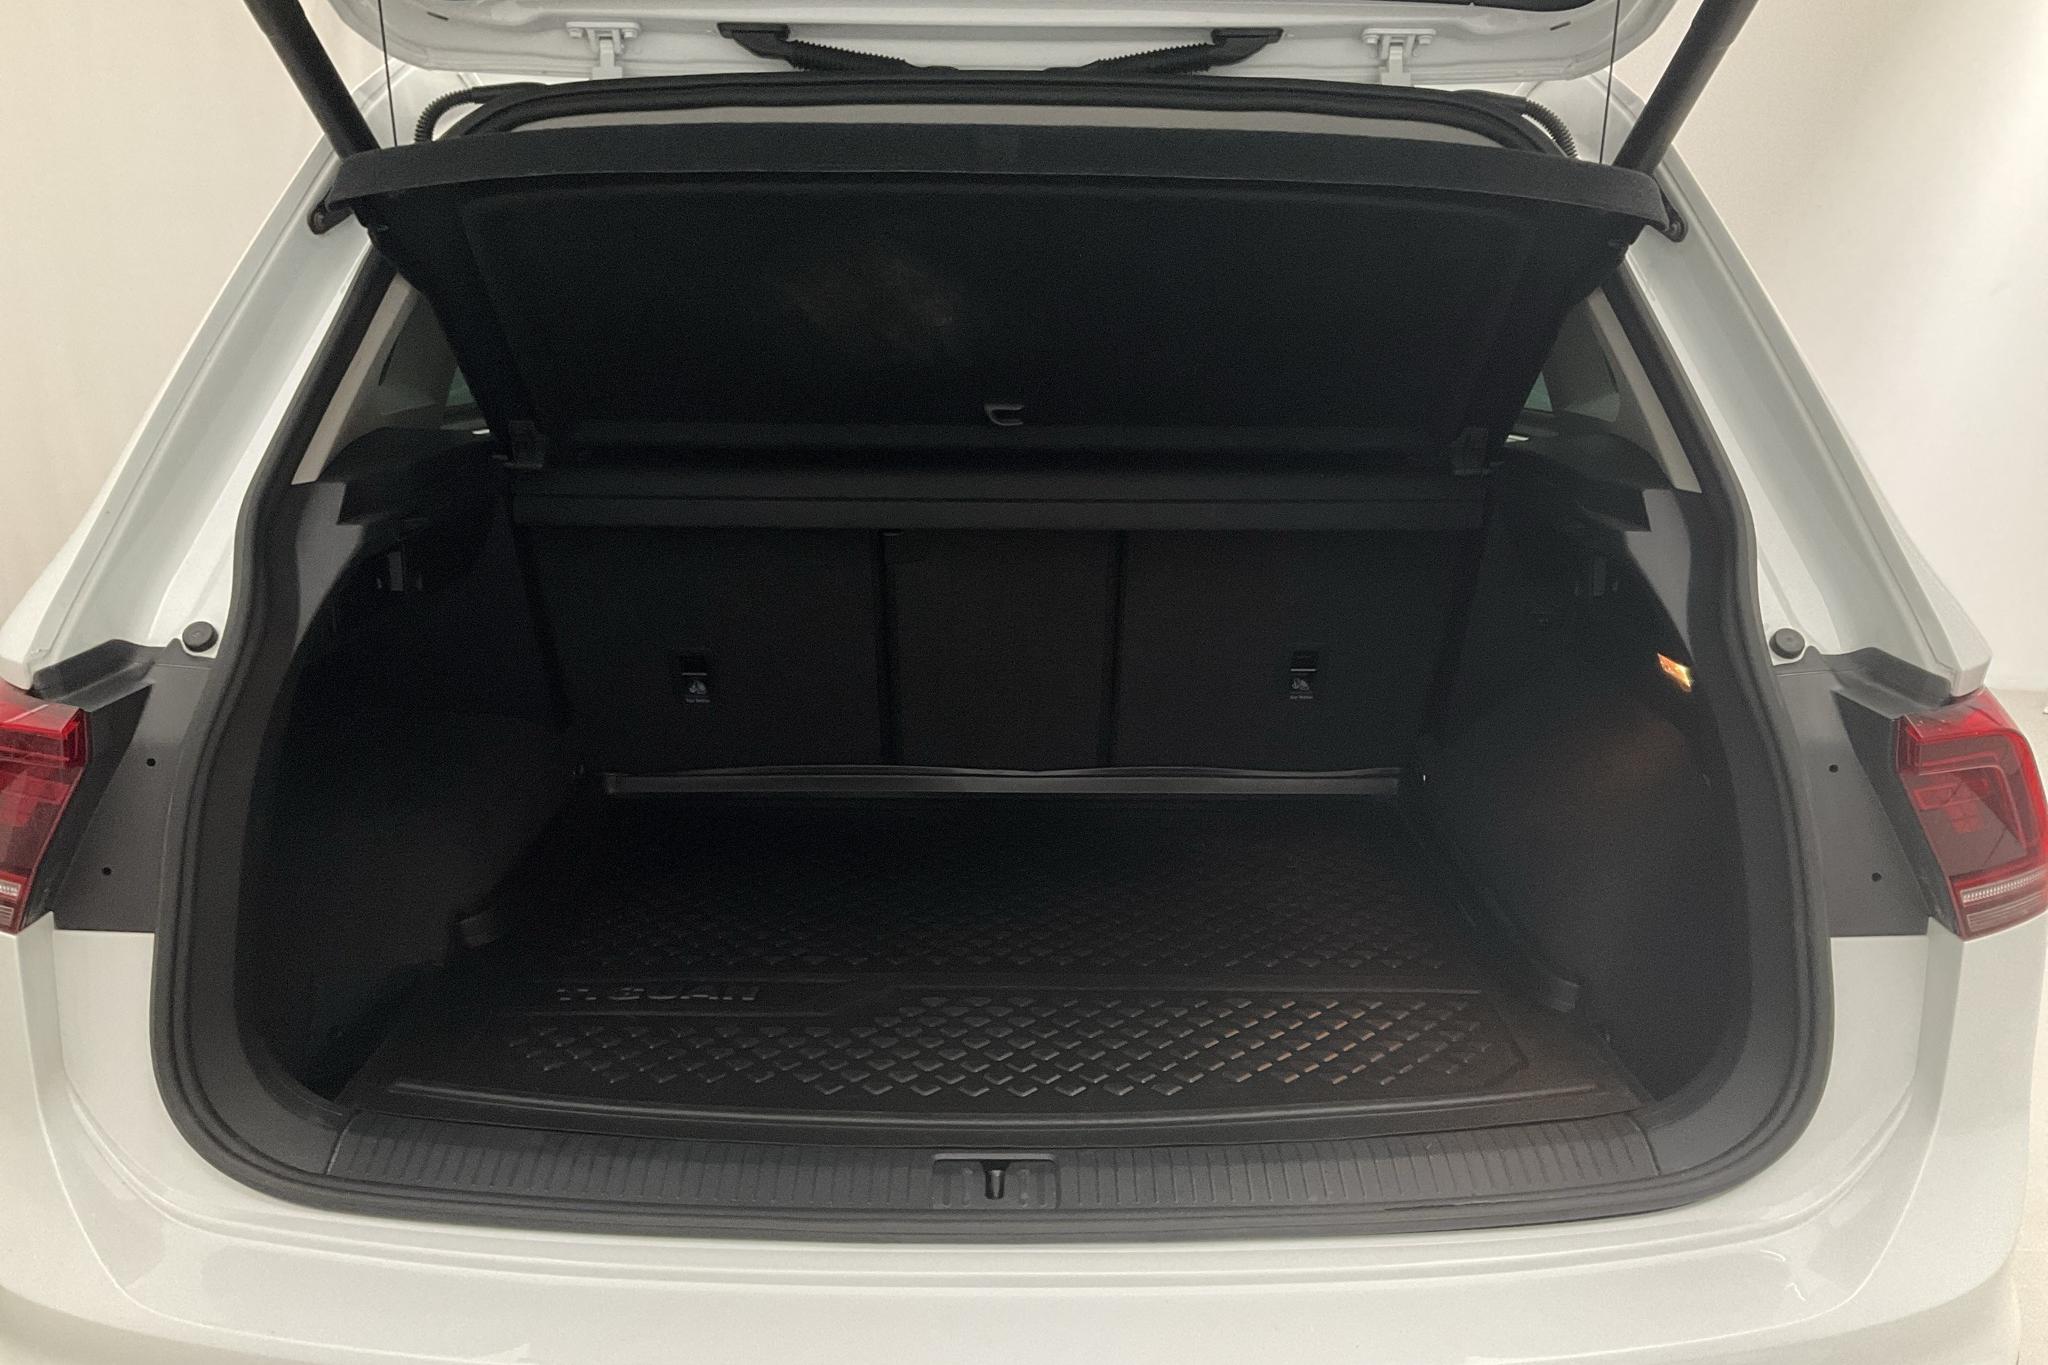 VW Tiguan 2.0 TDI 4MOTION (190hk) - 103 370 km - Automaatne - valge - 2019